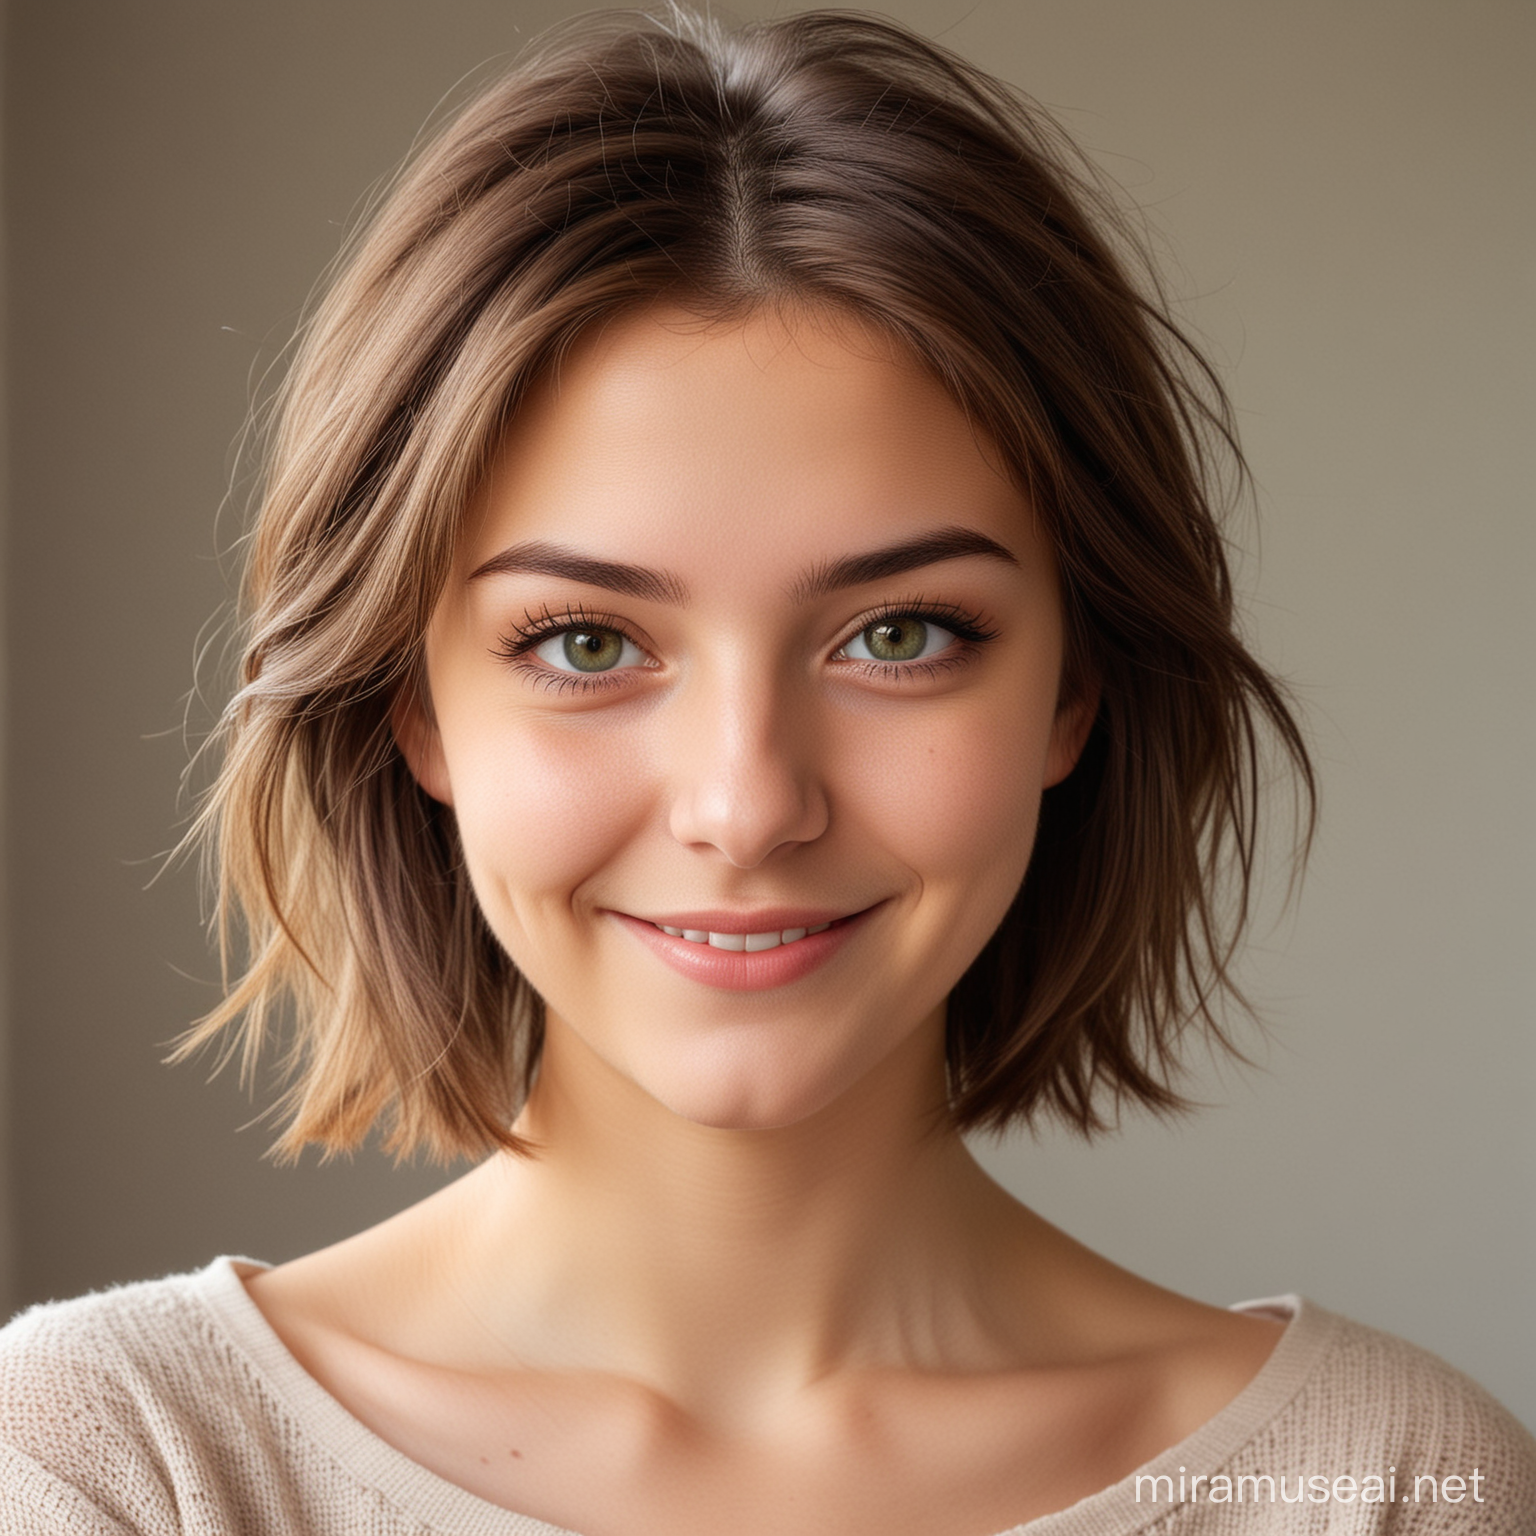 Mischievous GreenEyed Teenage Girl with Short Brown Hair